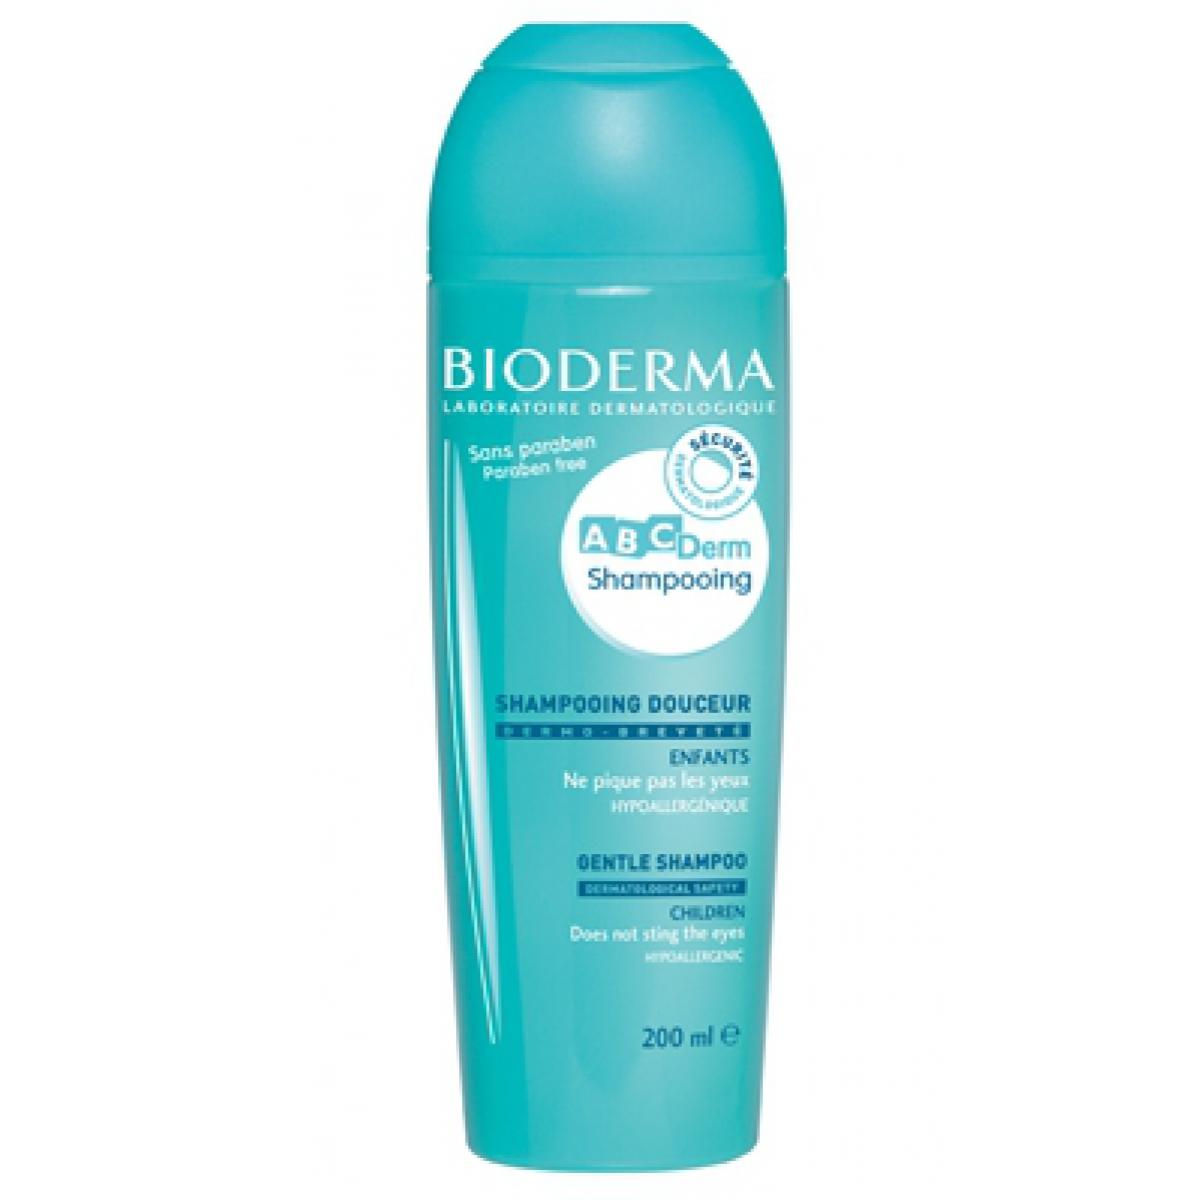 Bioderma Abcderm shampooing 200ml